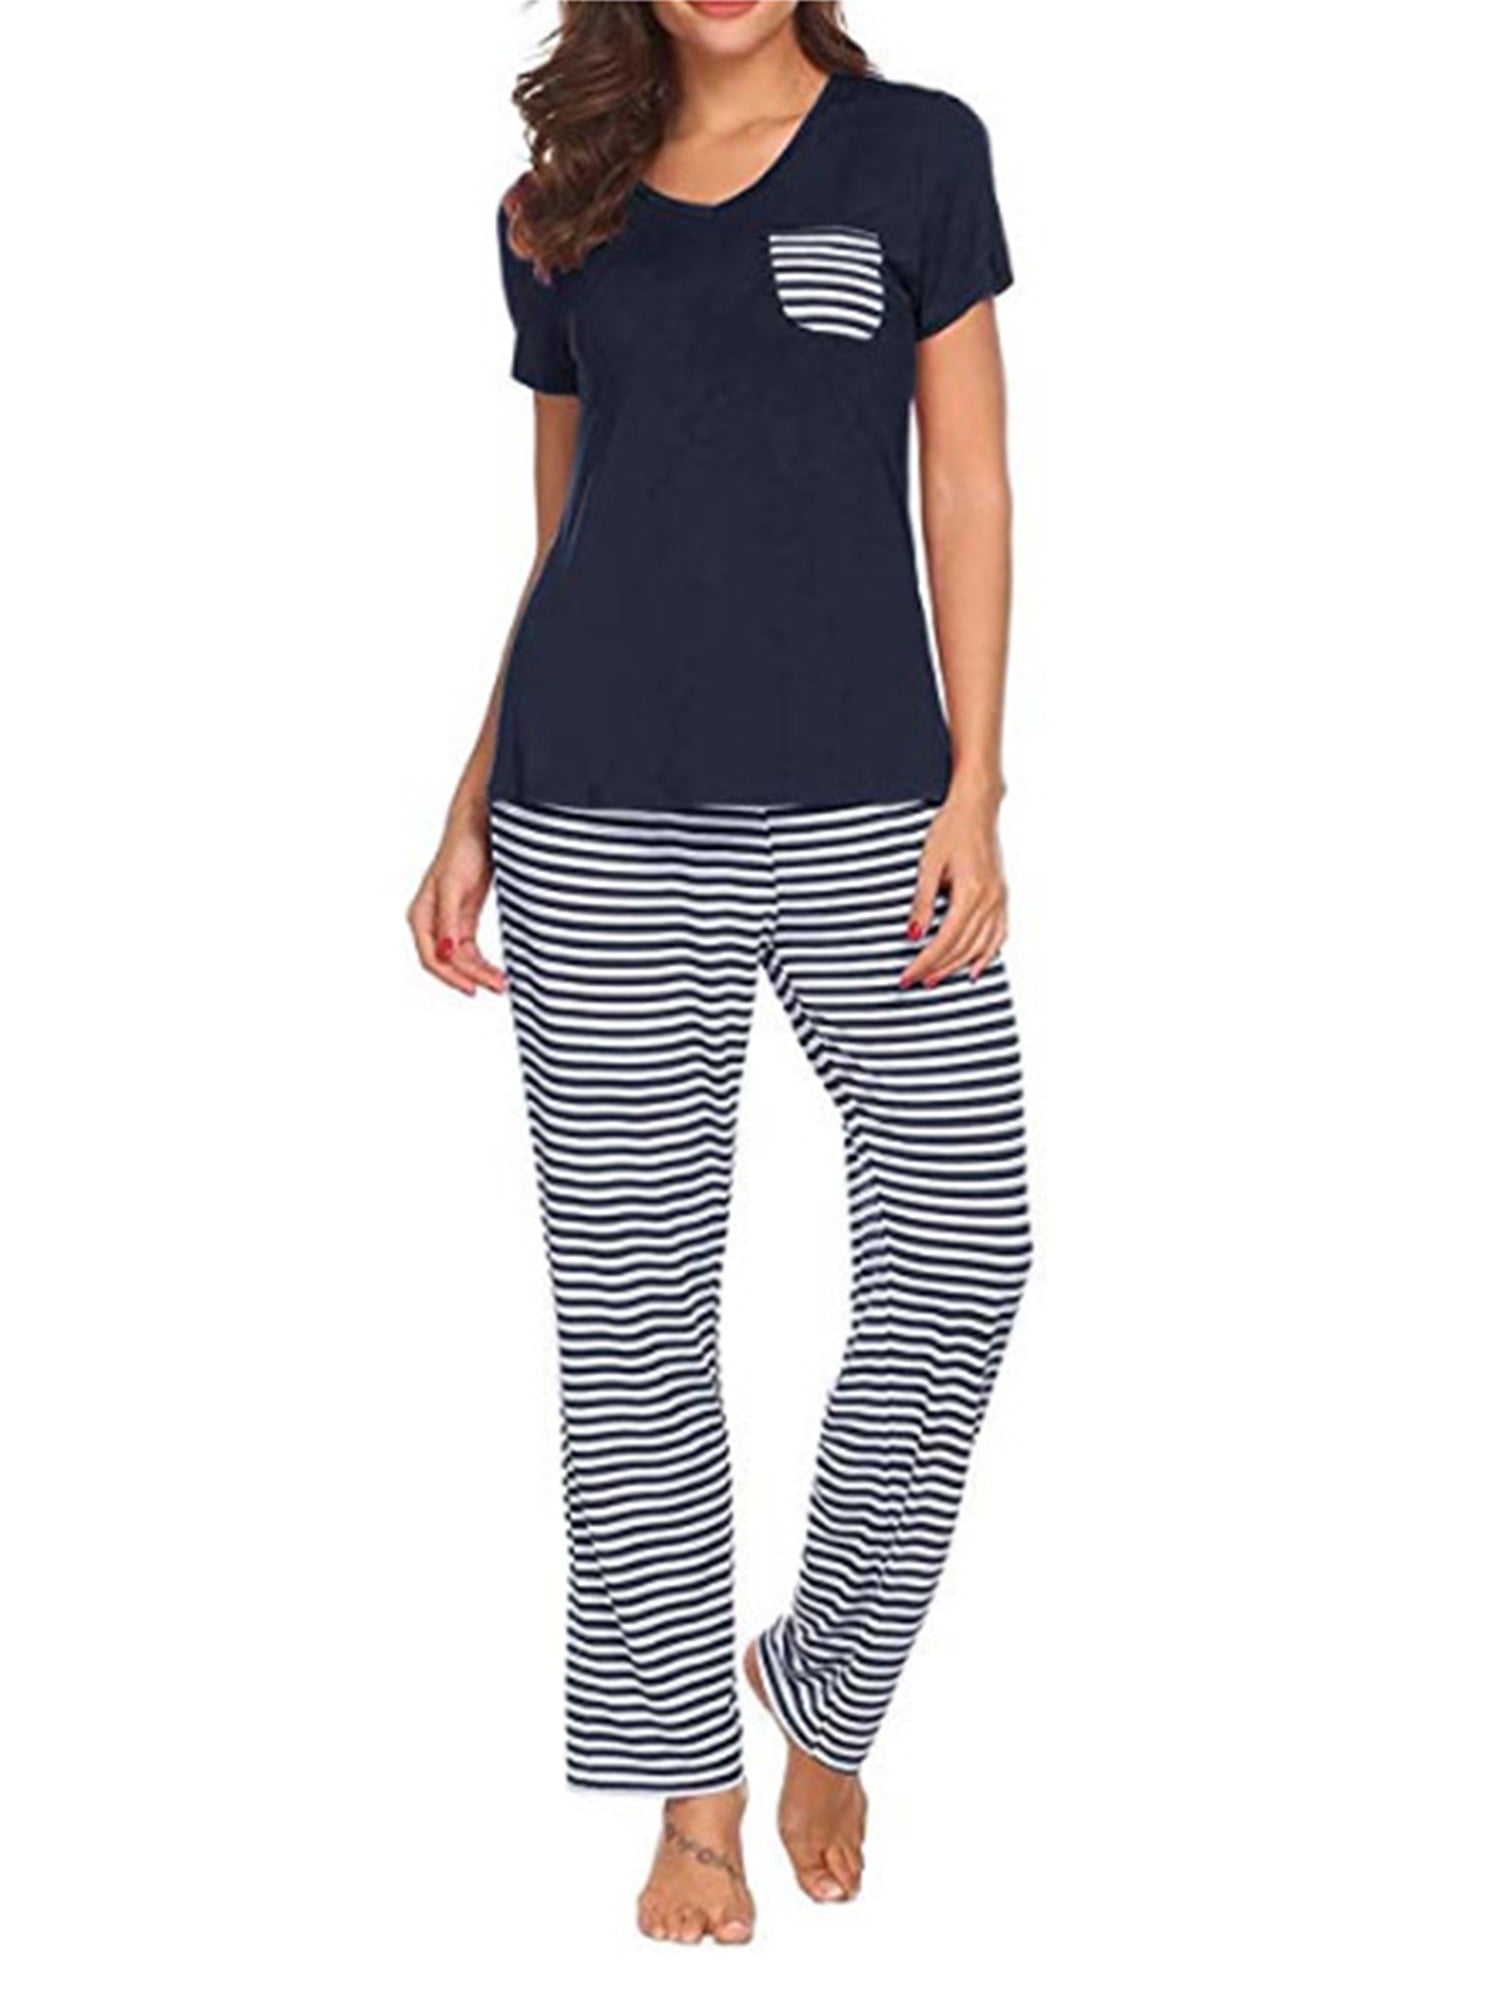 Sleepwear Tops with Capri Pants Casual and Fun Prints Pajama Sets Women’s Pajama Set